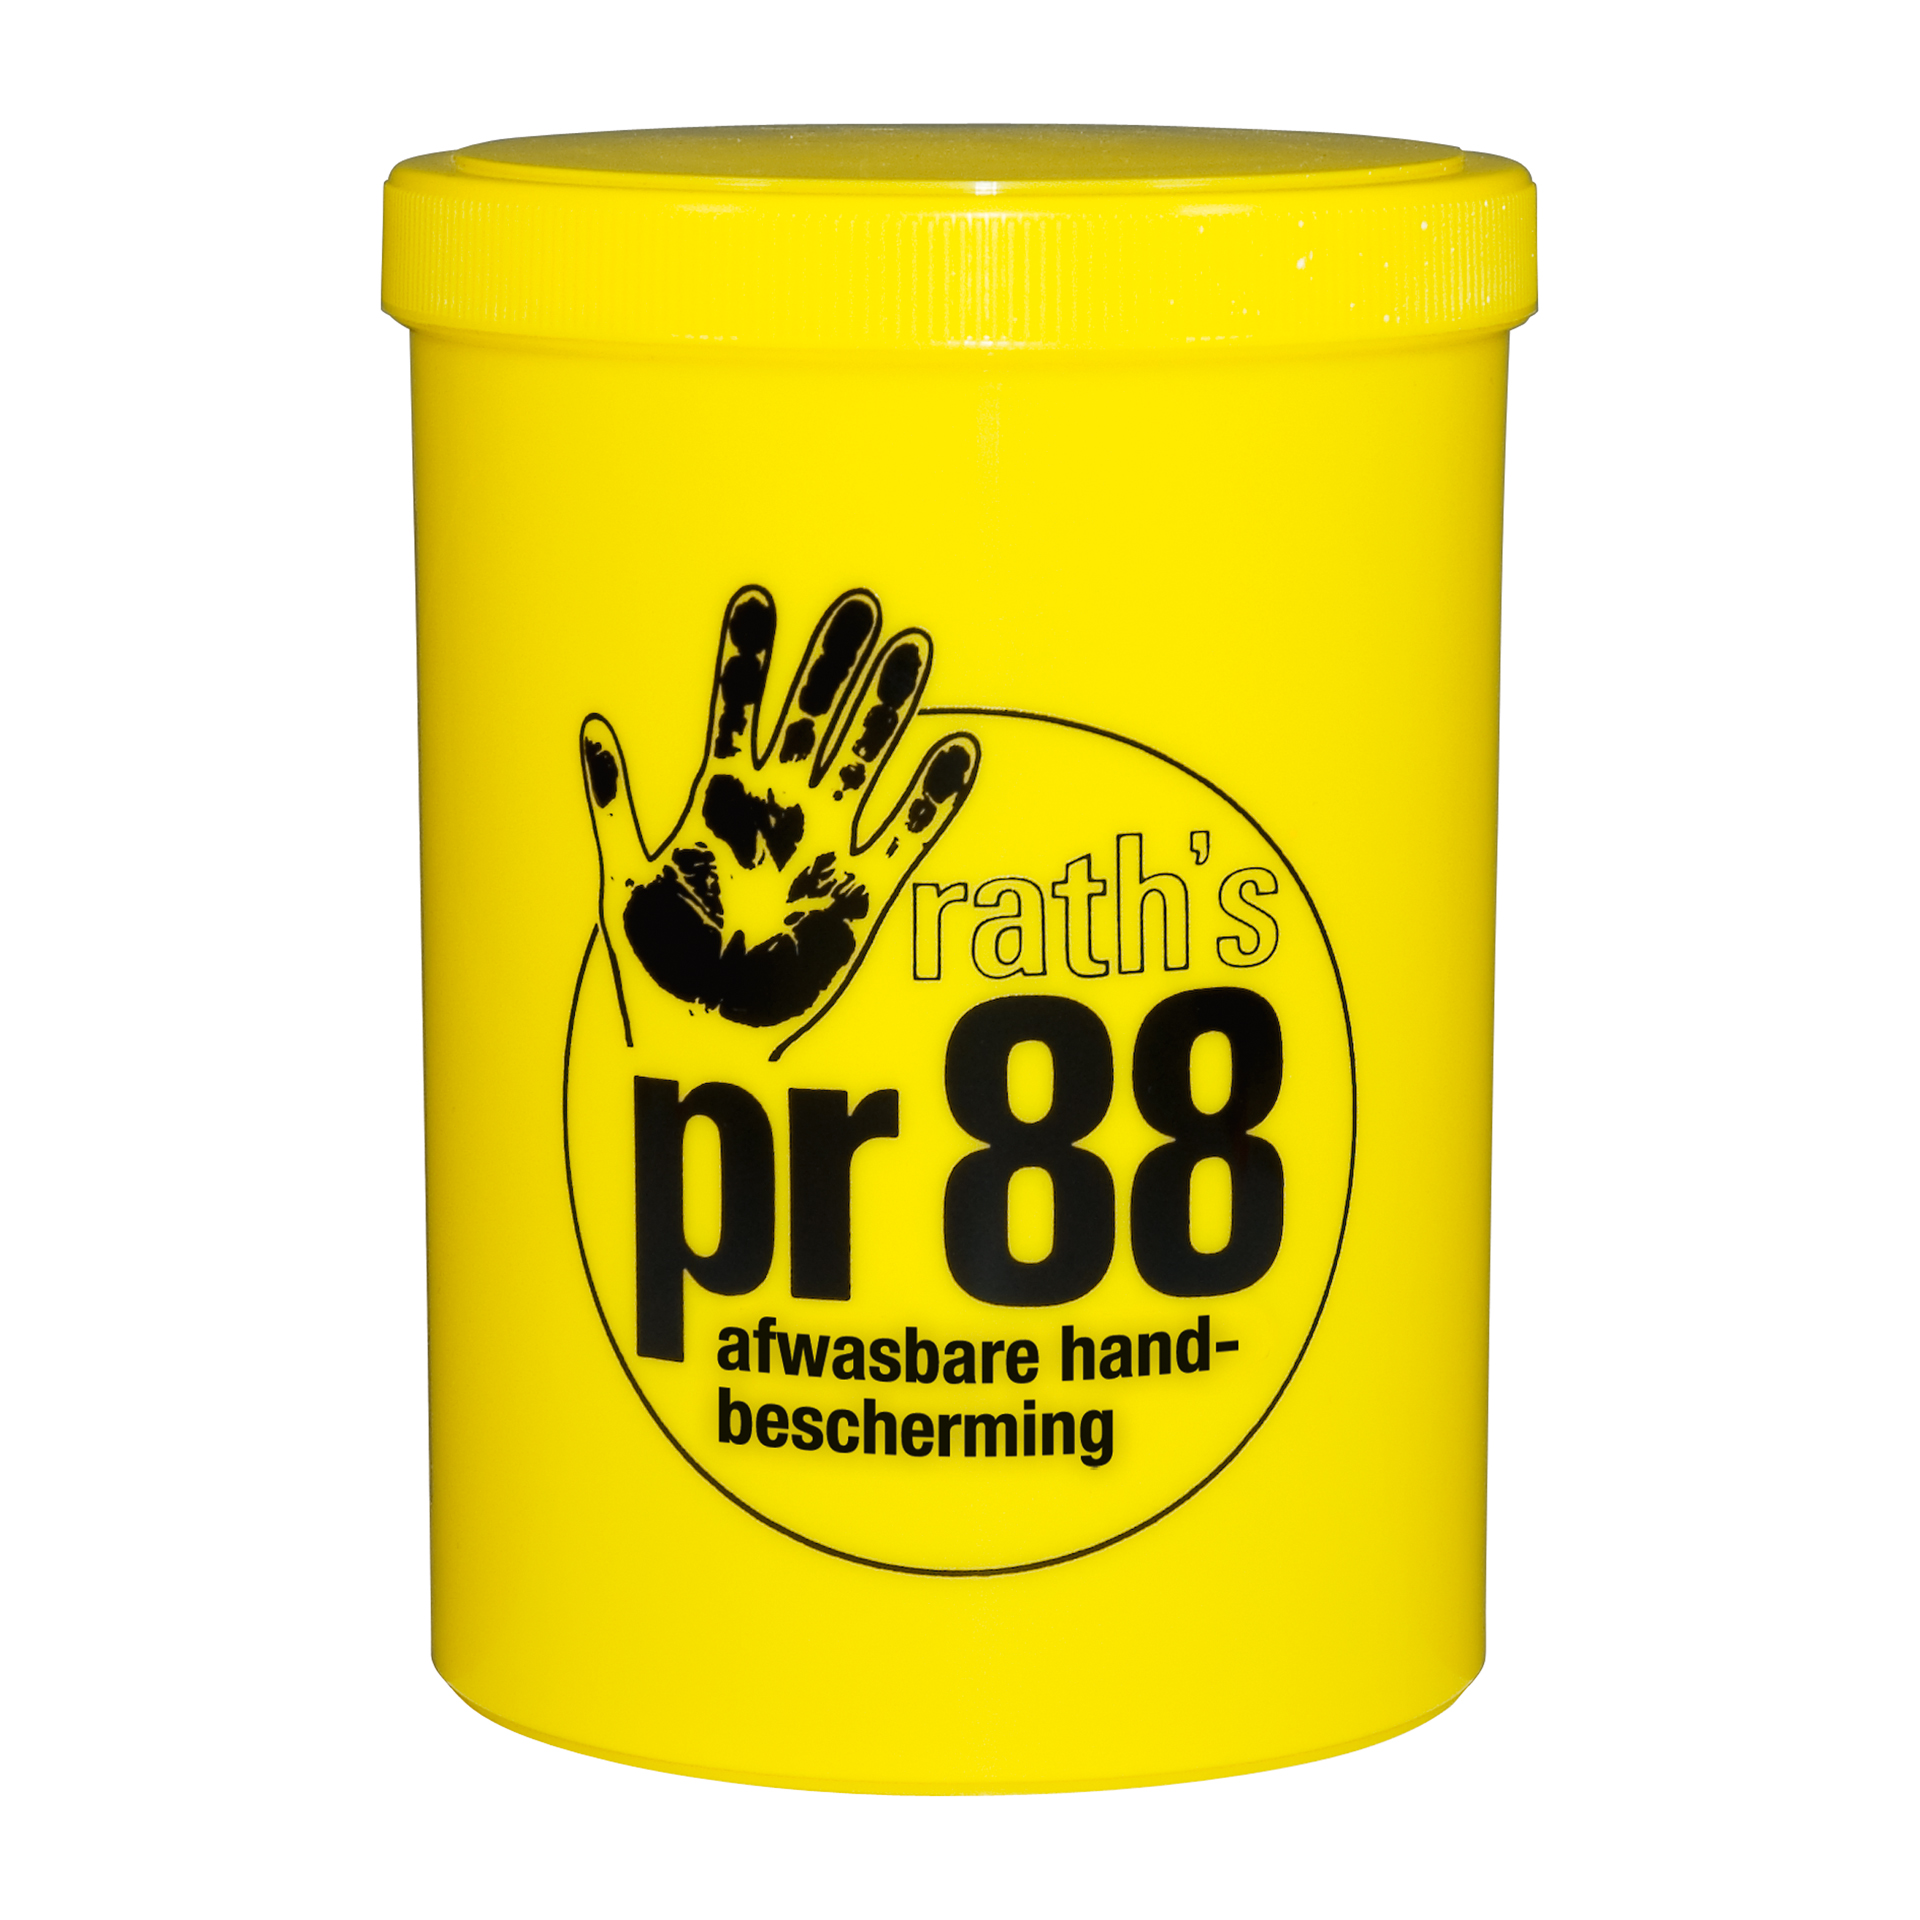 PR88 pr88 Handbeschermingscreme 1L 6174000